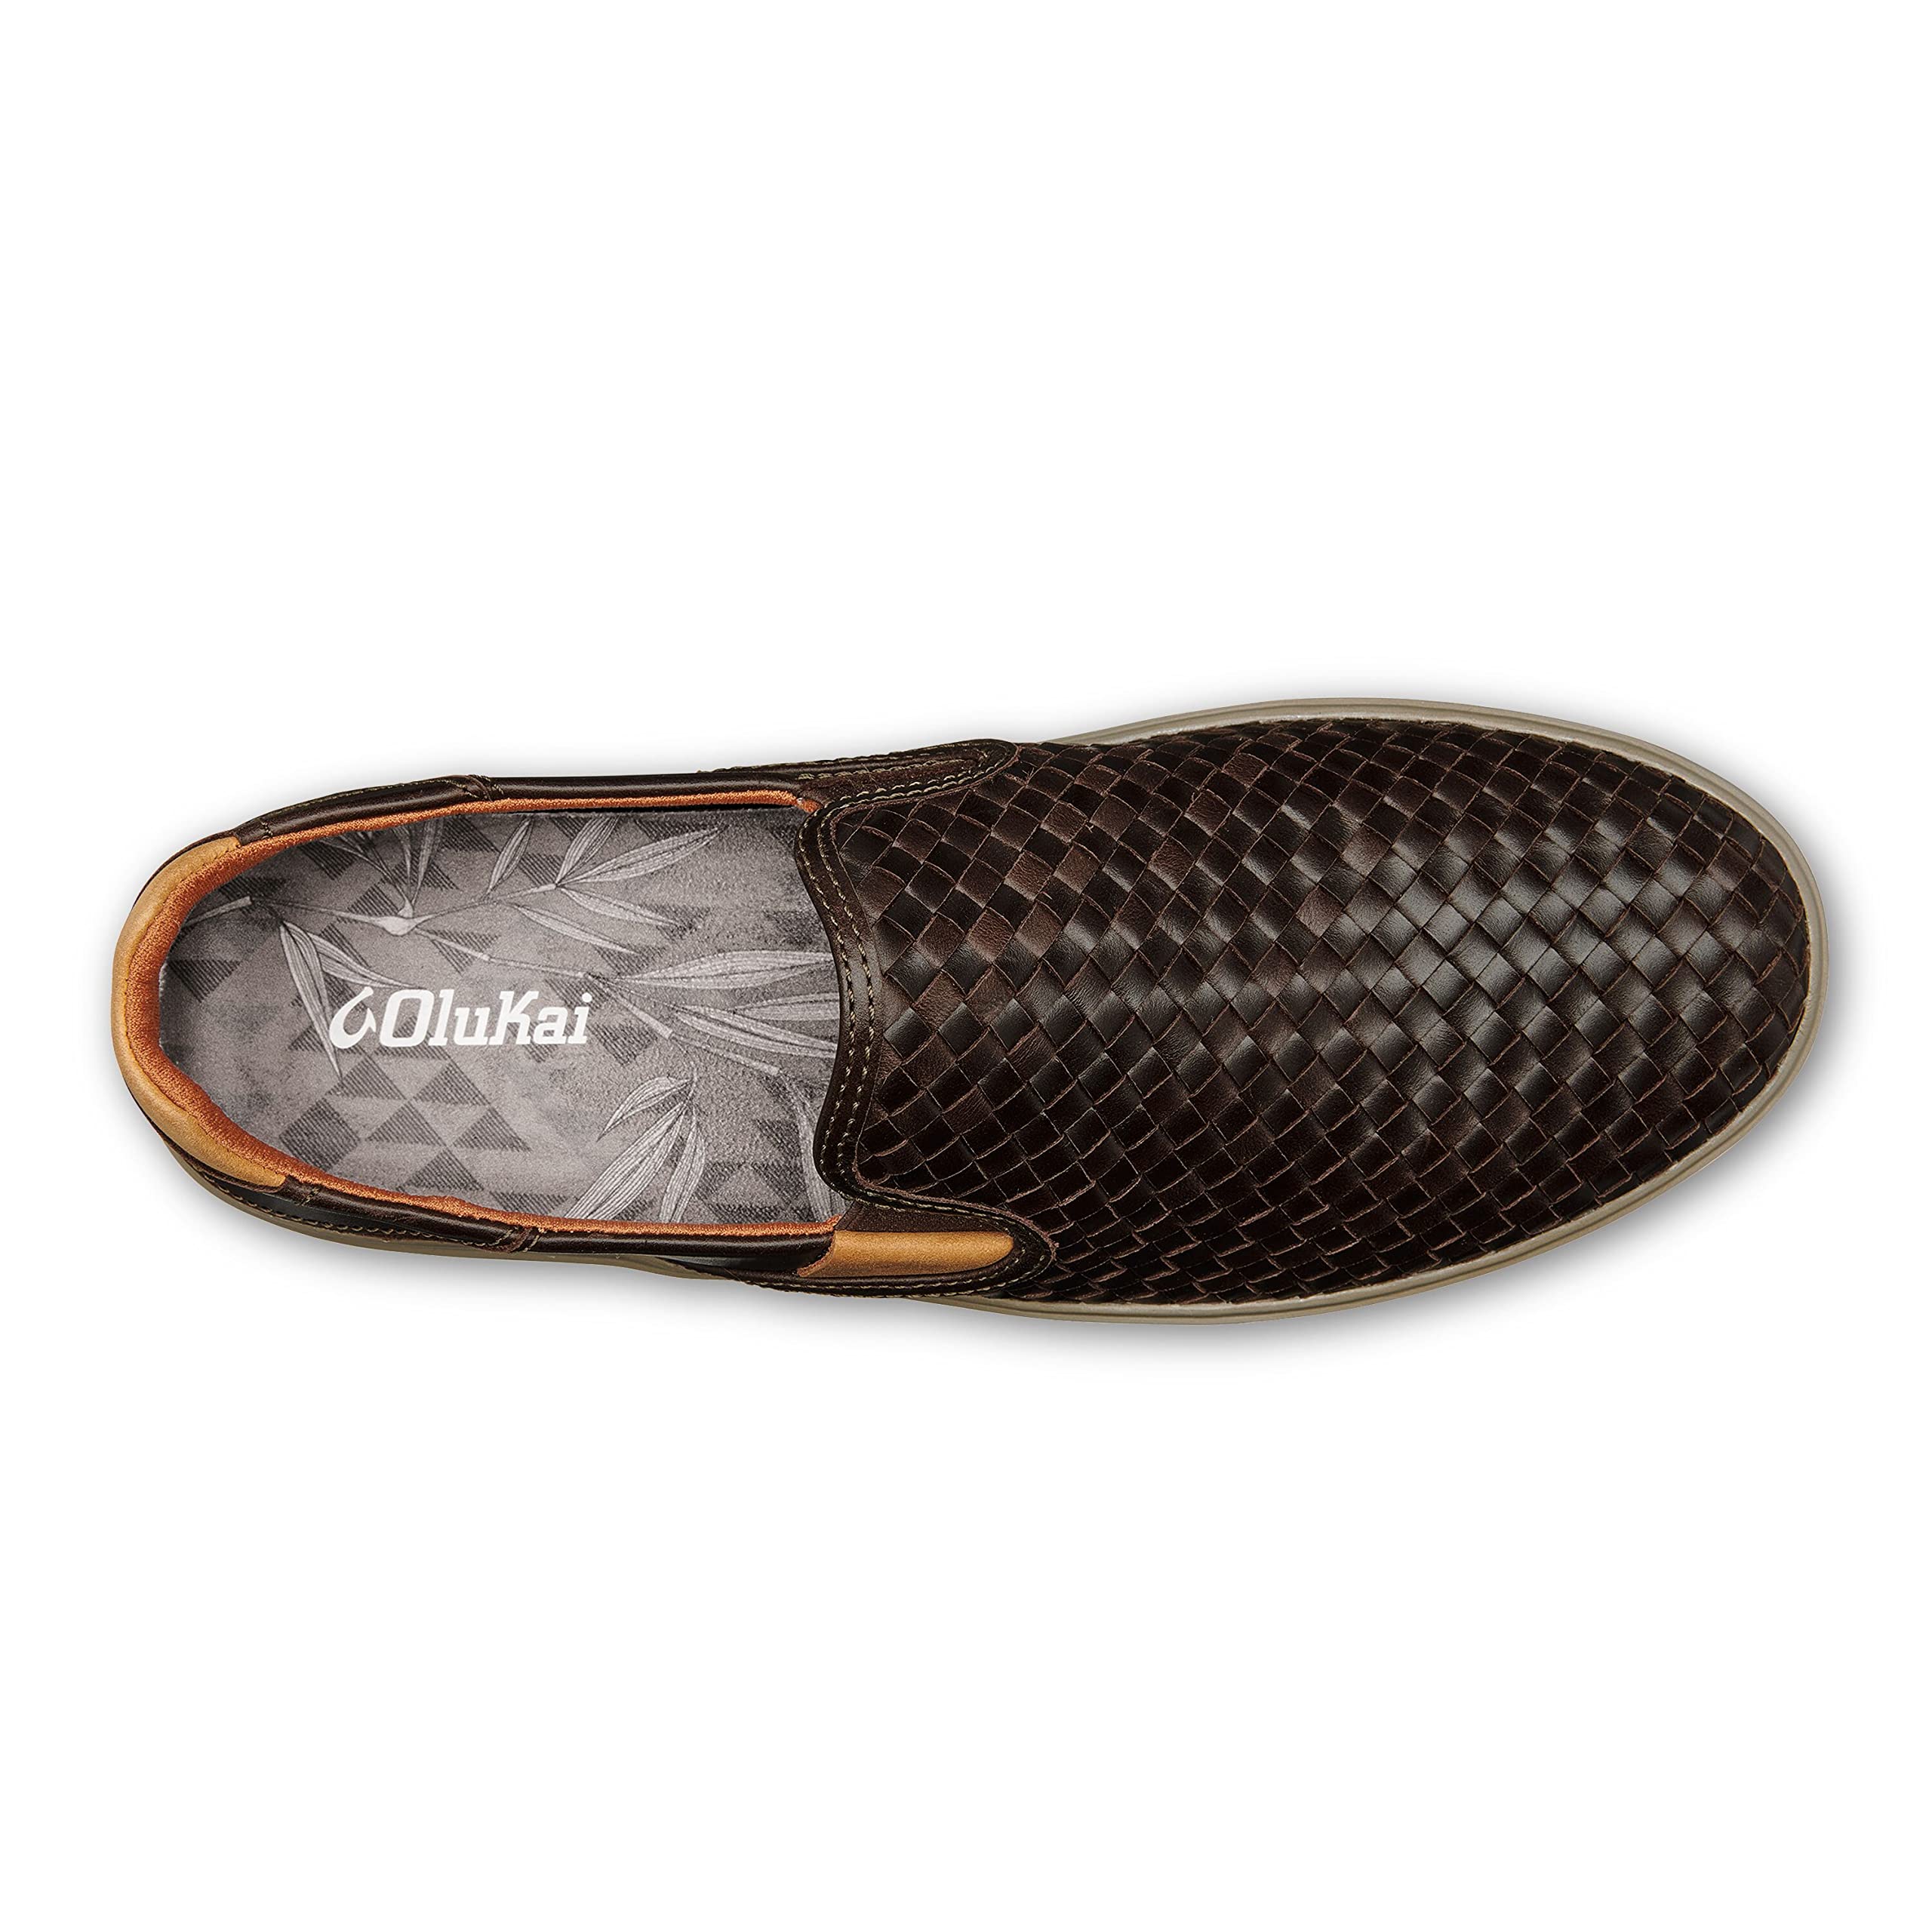 OLUKAI Lae'ahi Lauhala Men's Slip On Sneakers, Drop-in Heel & All-Day Comfort, Breathable Lining, Premium Leather, Dk Wood/Dk Wood, 11